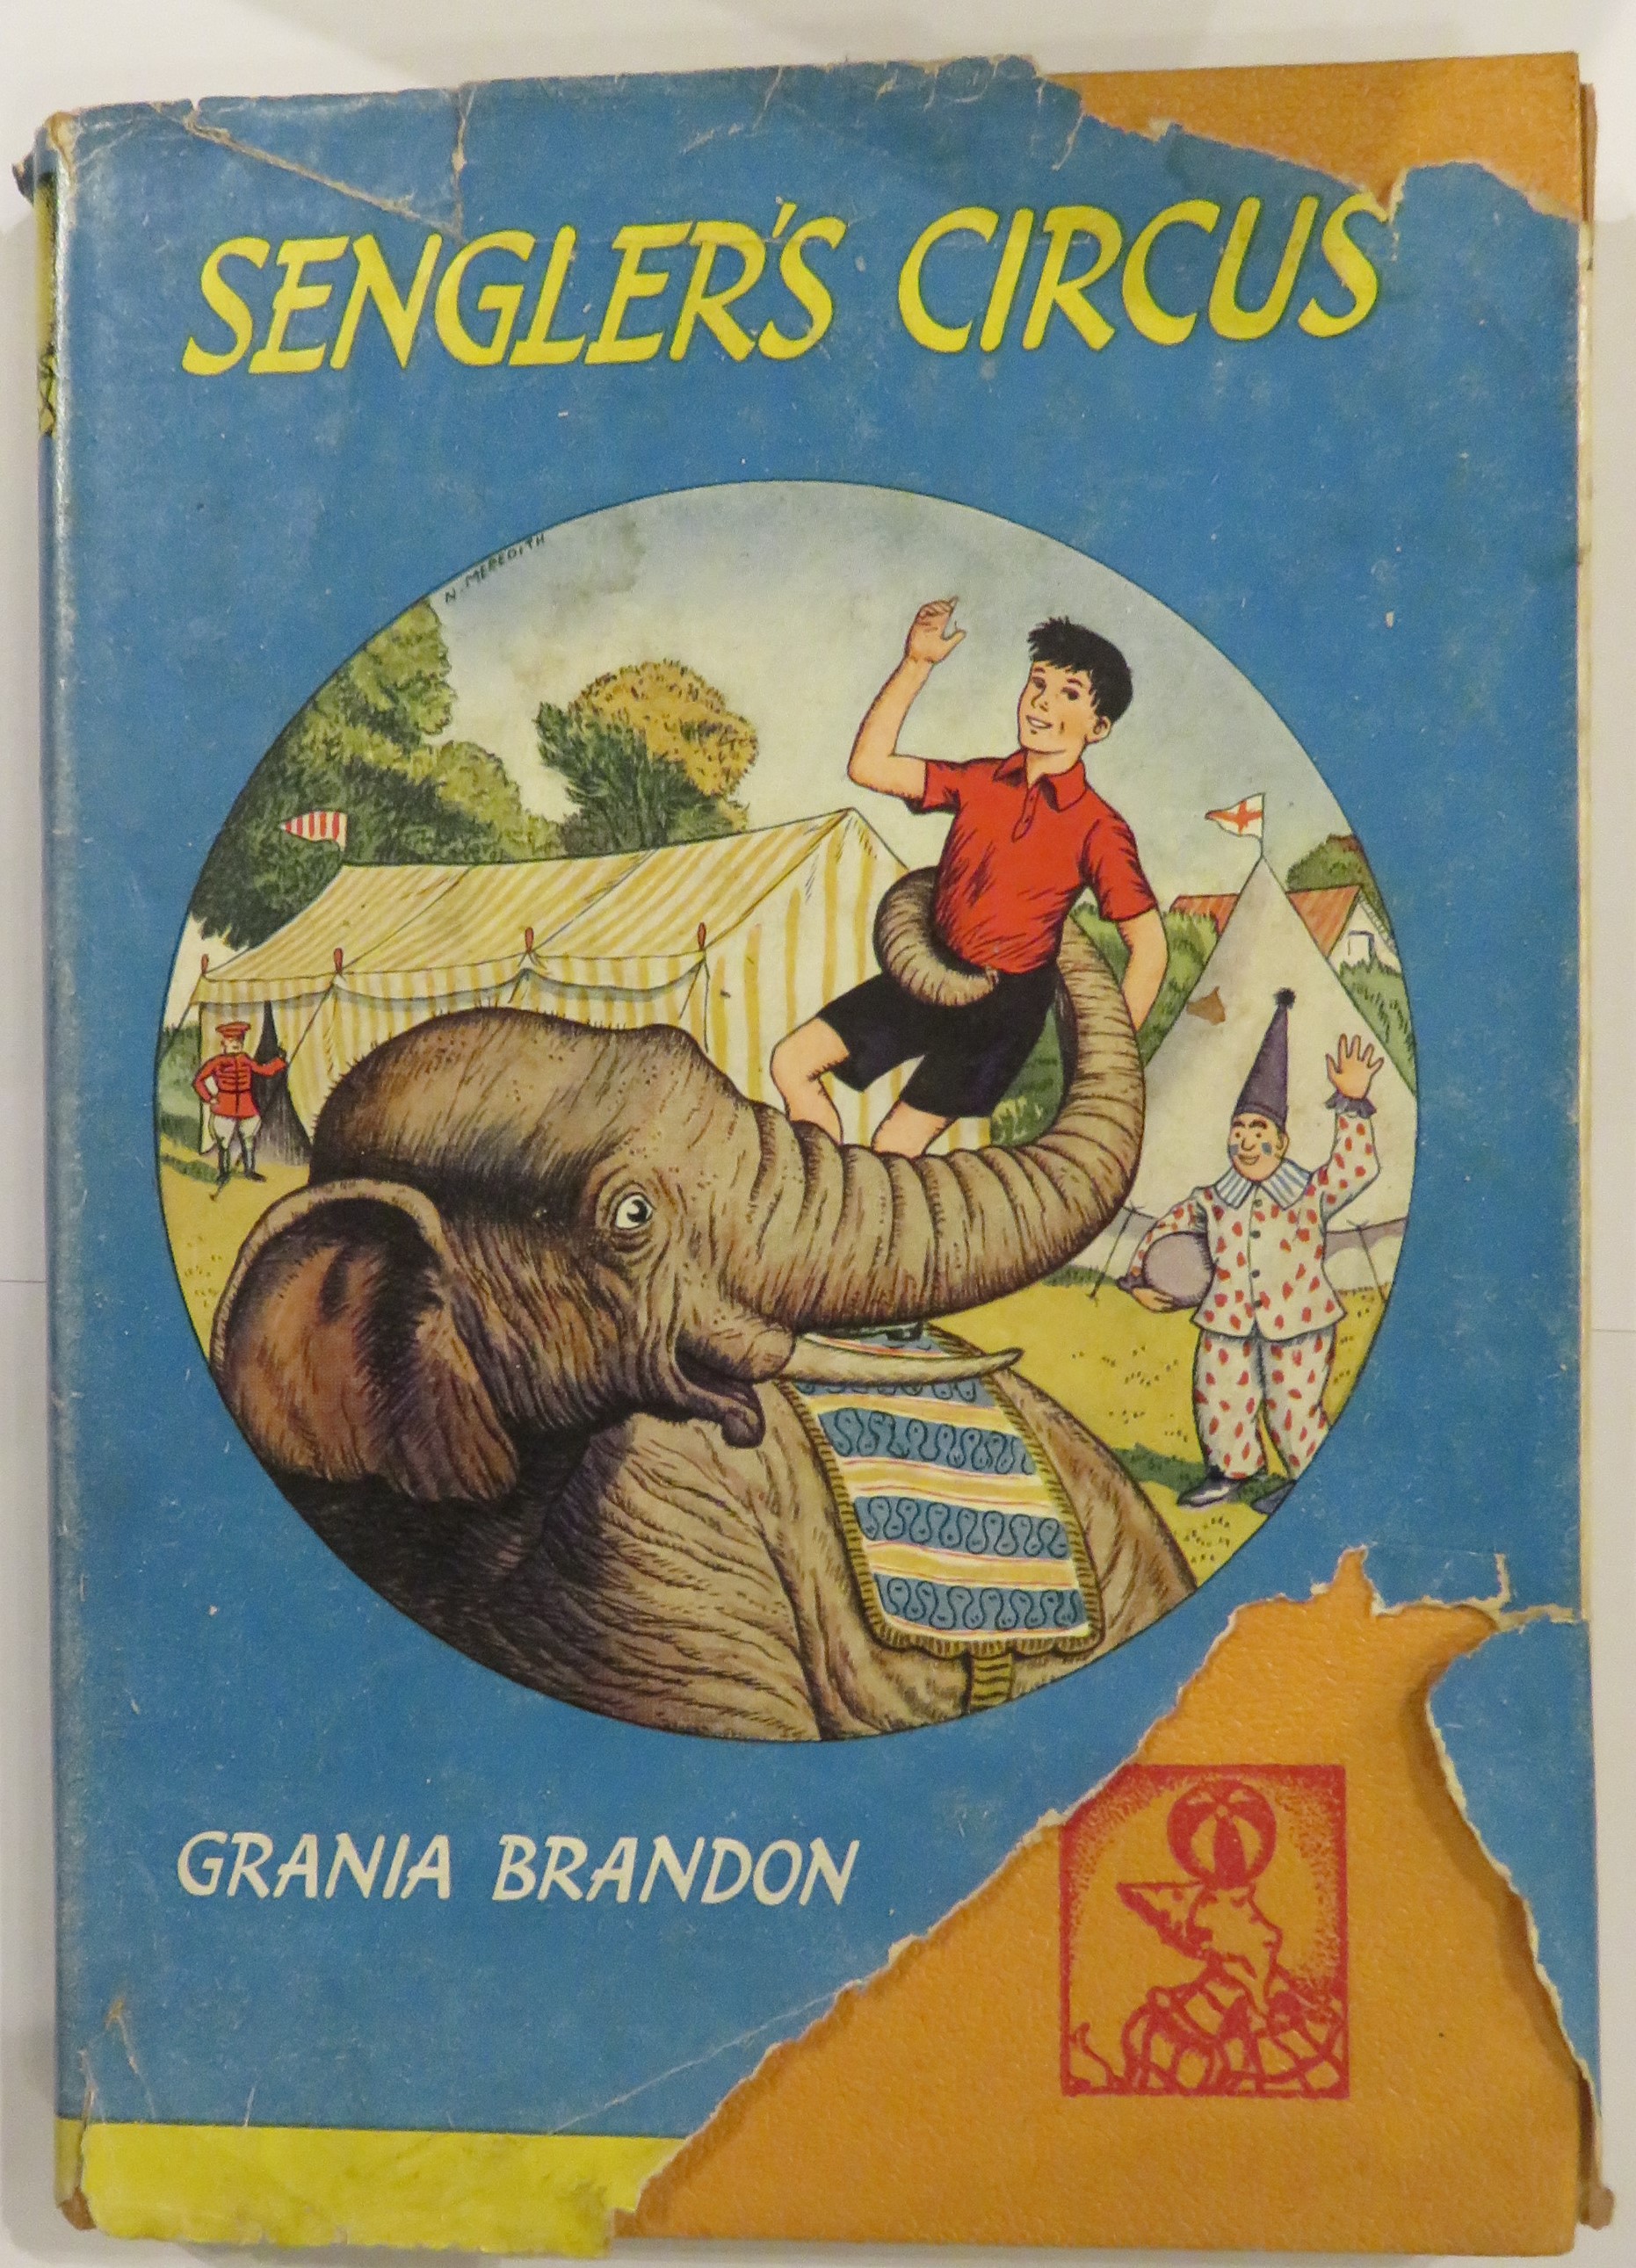 Sengler's Circus